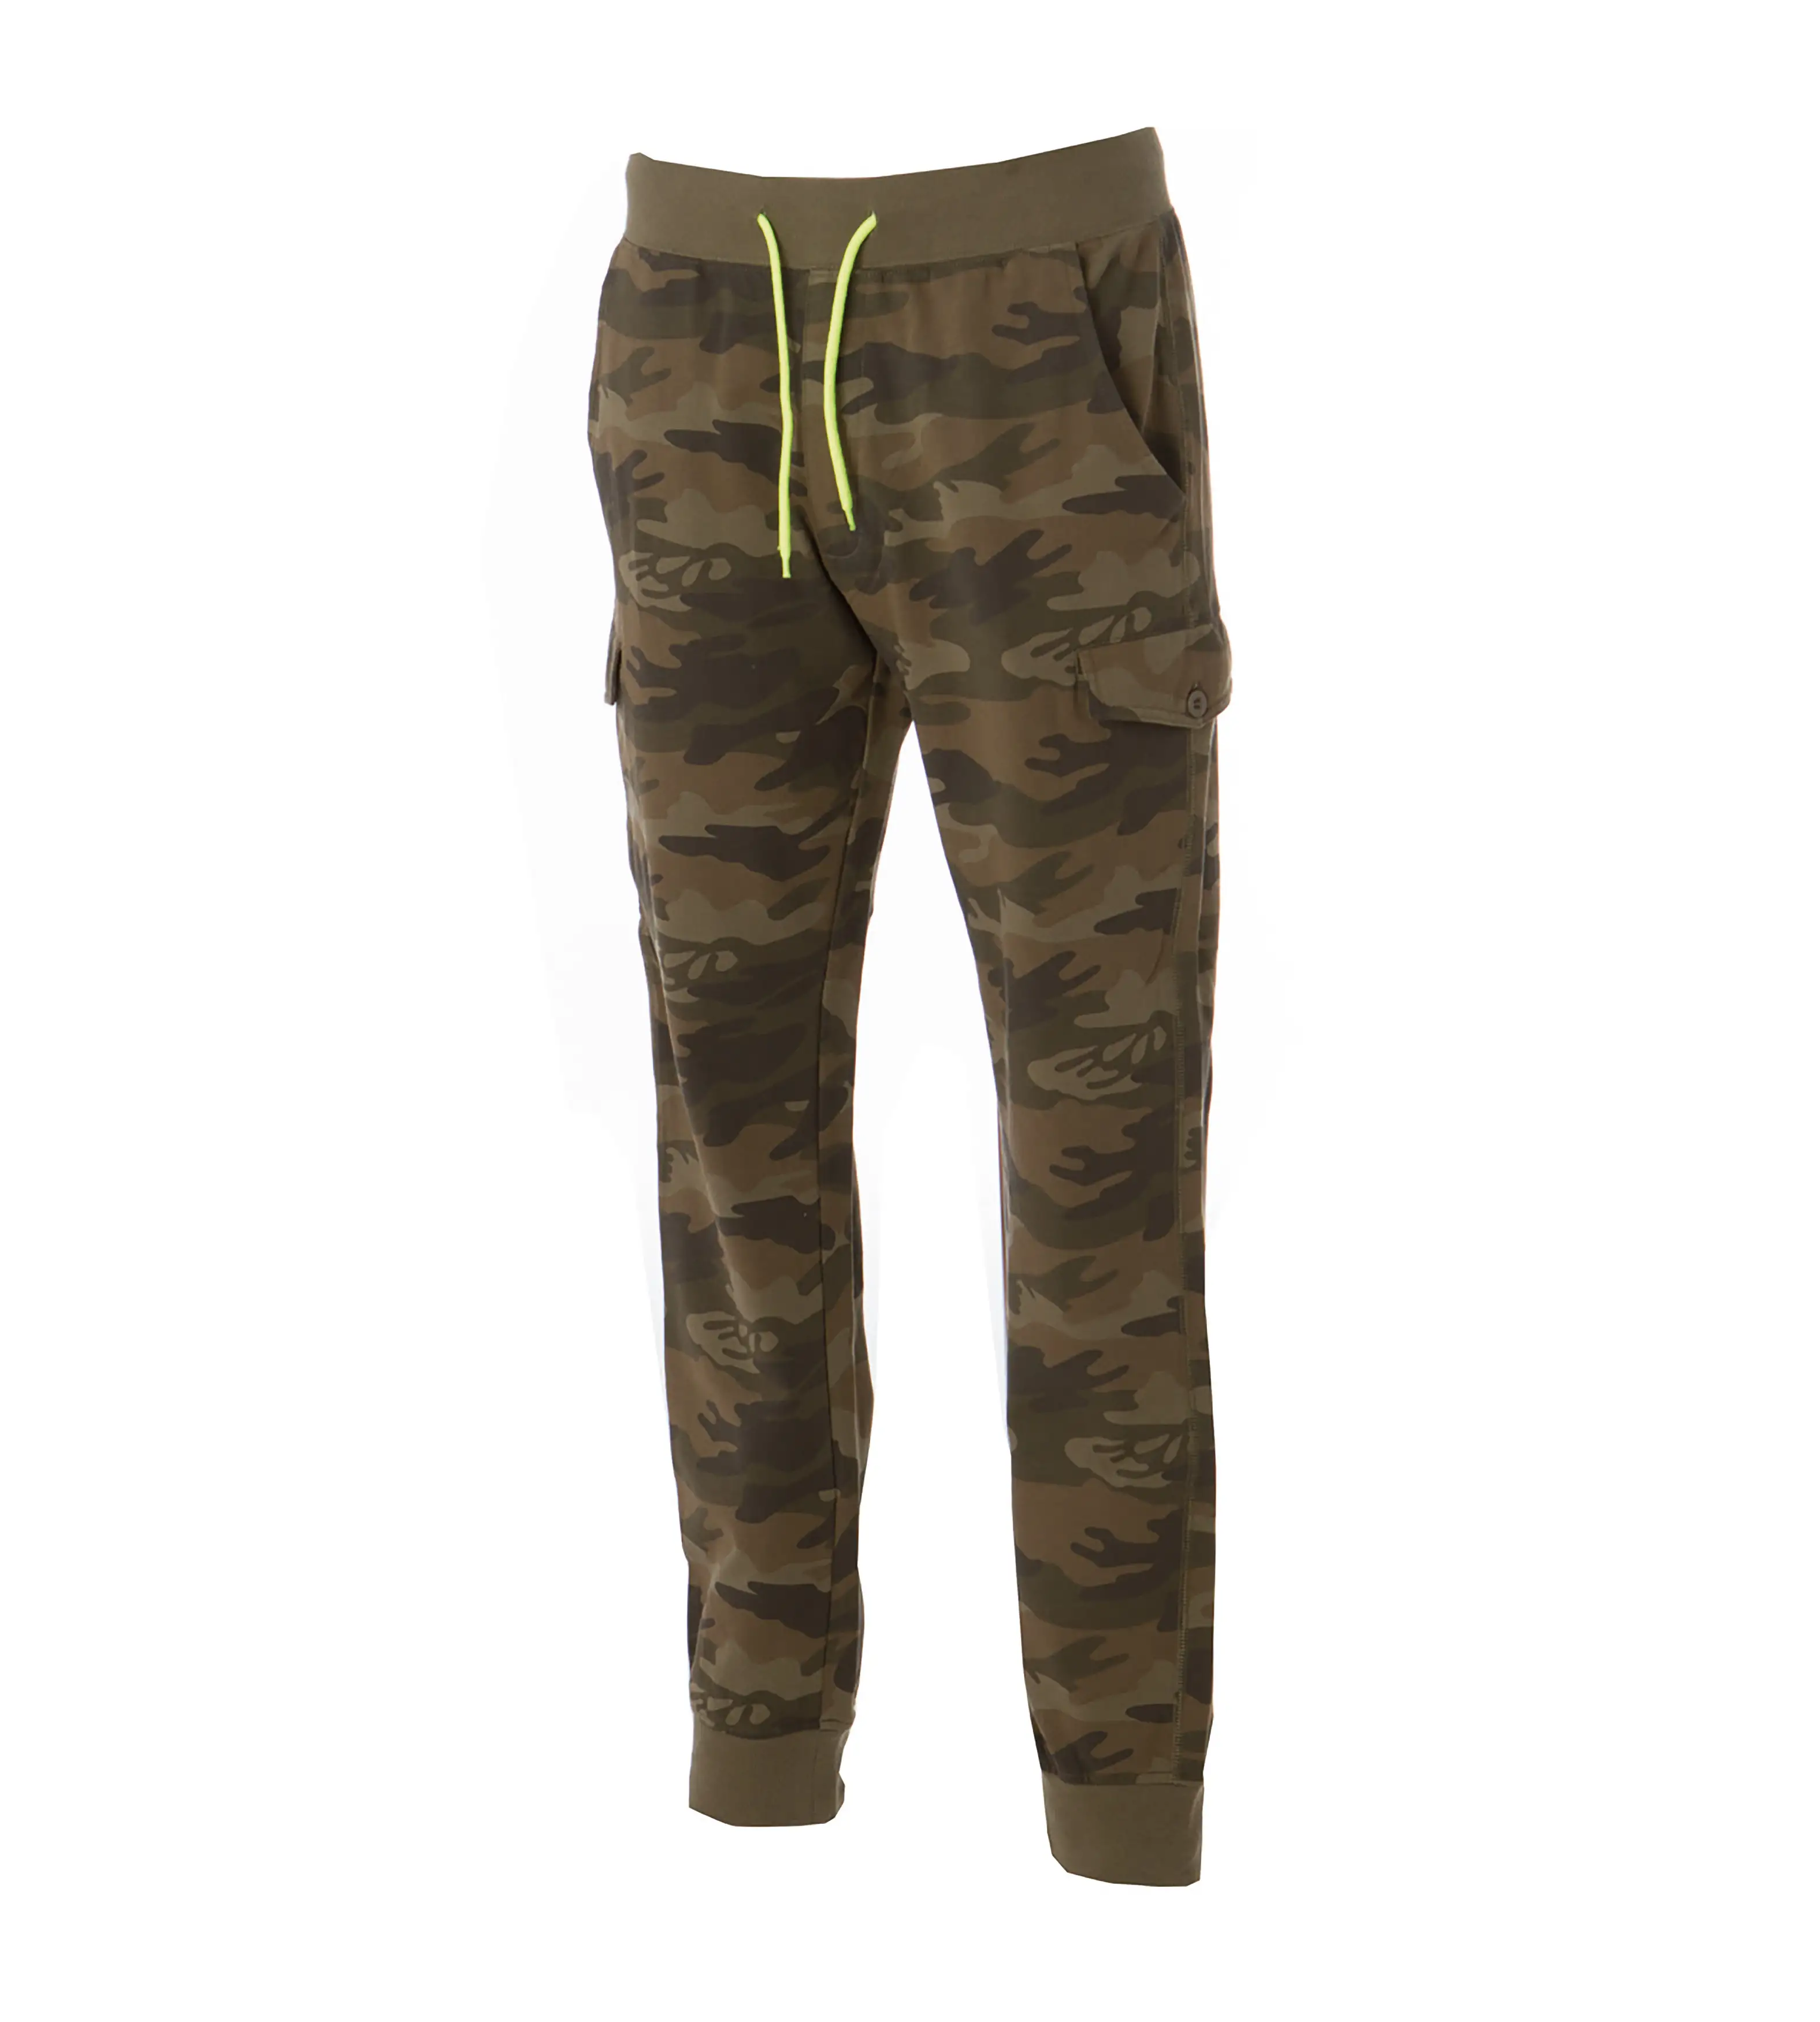 Pantalone damasco man - camouflage green - s